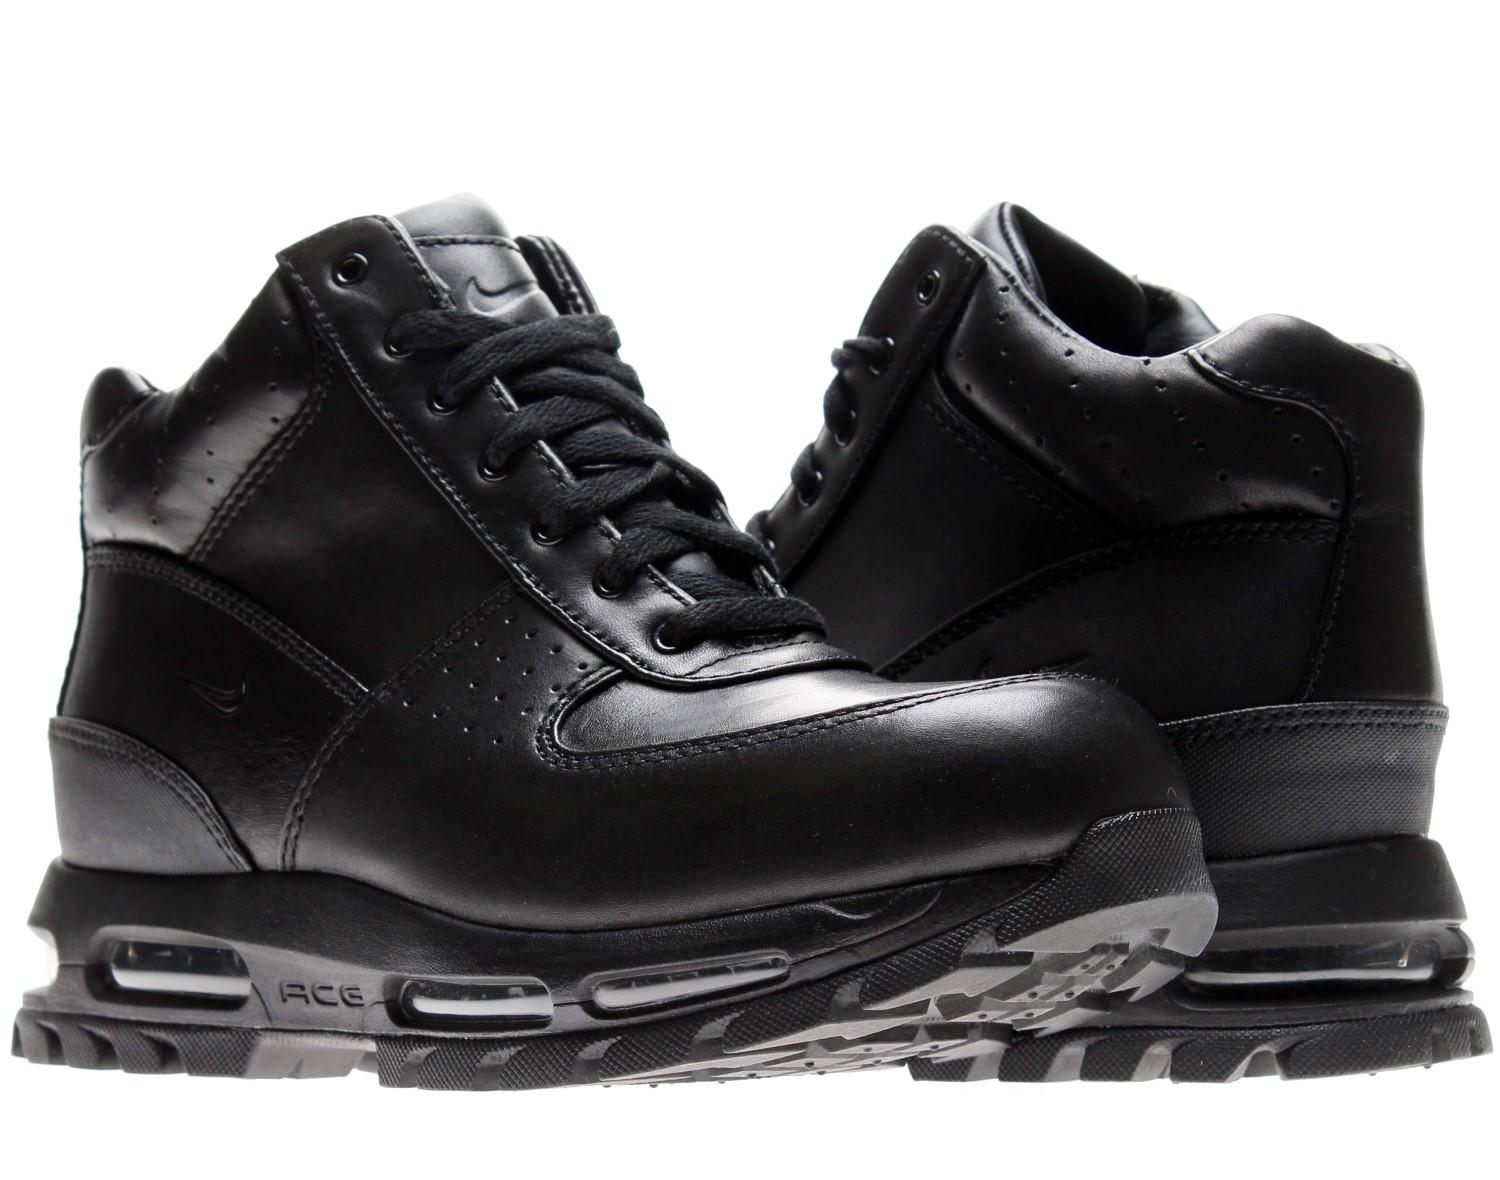 Lyst - Nike Mens Air Max Goadome 2013 Acg Winter Boots Black/black (11 D(m) Us) in Black for Men